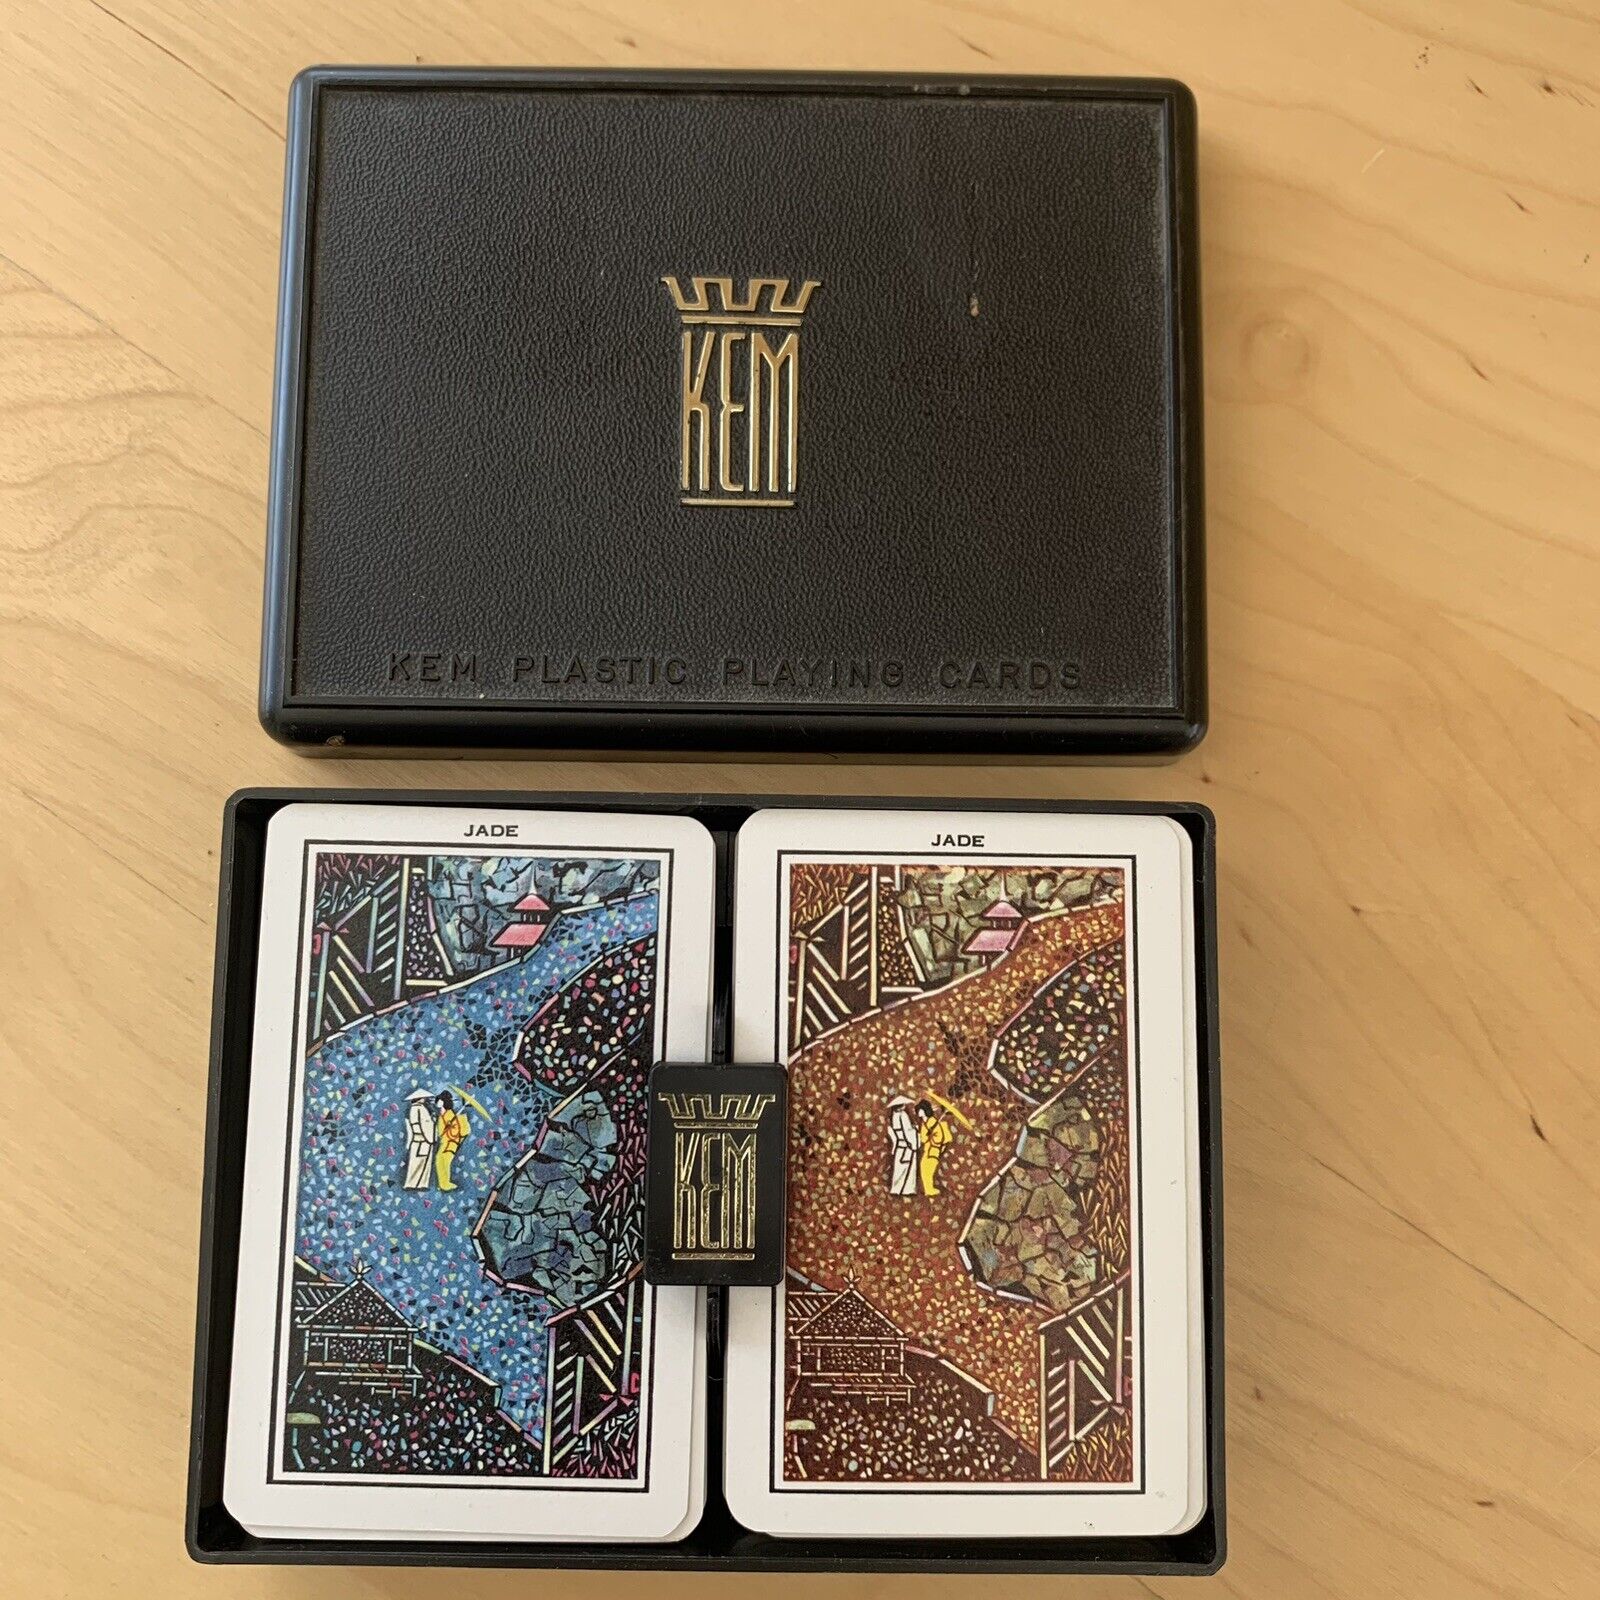 Vintage KEM Plastic Playing Cards Jade Canasta Poker Bridge 2 Decks Double Deck